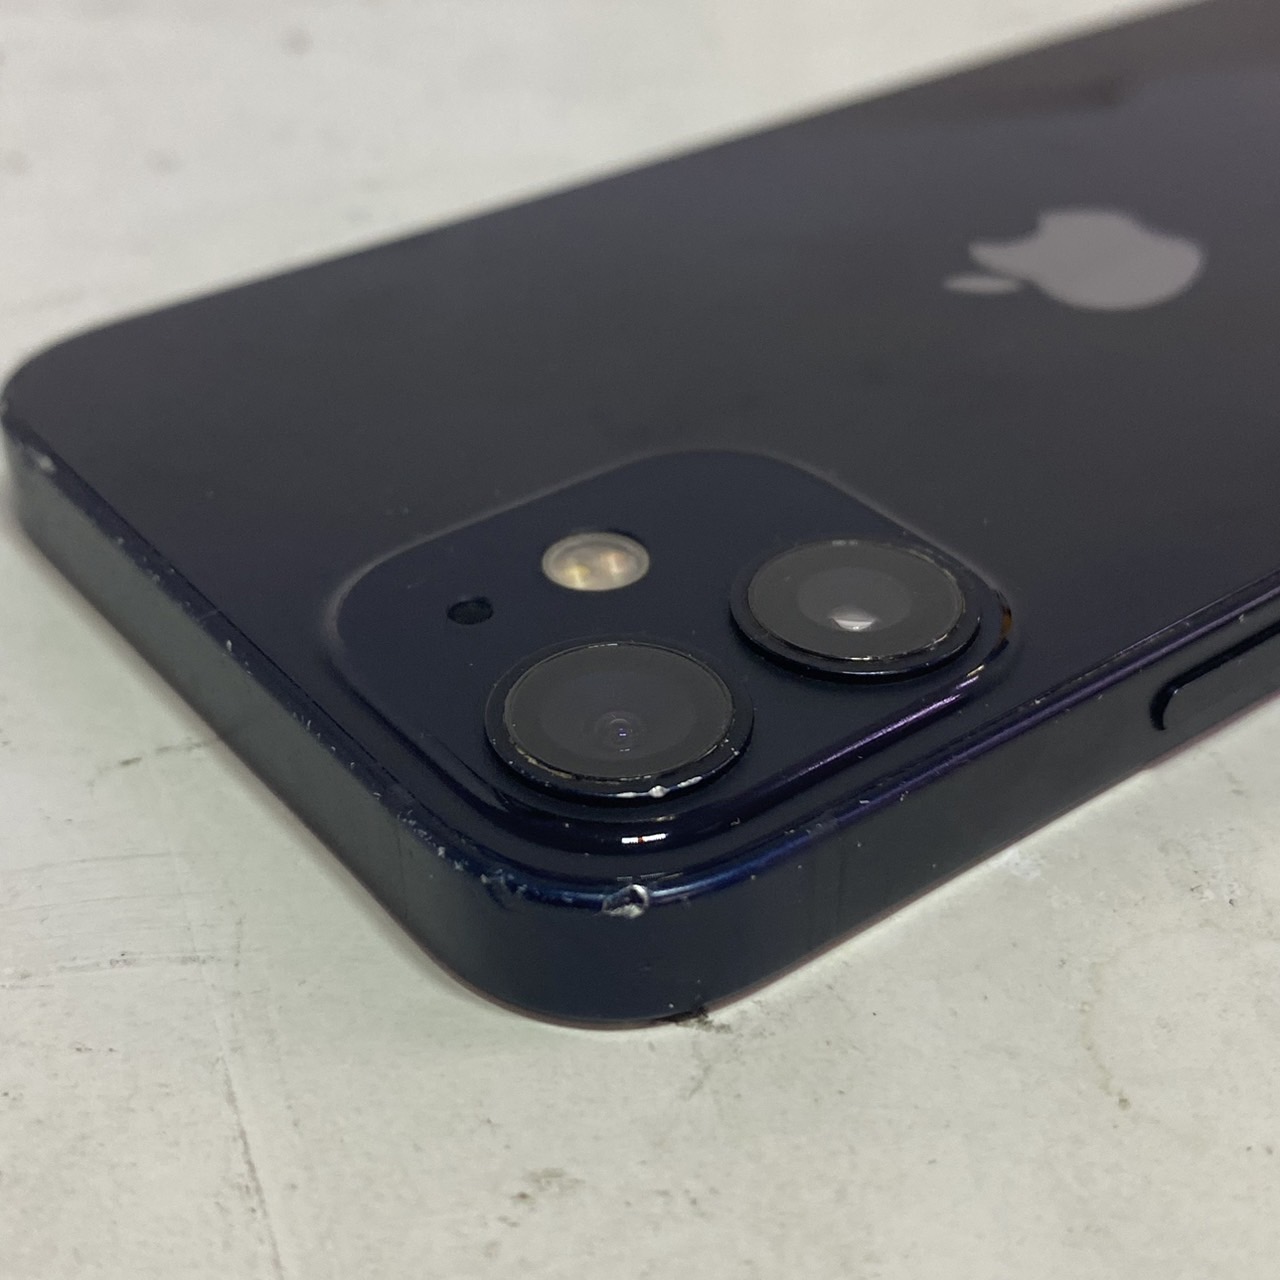 APPLE(アップル) iPhone 12 mini 64GB SIMフリー [ブラック]の激安通販